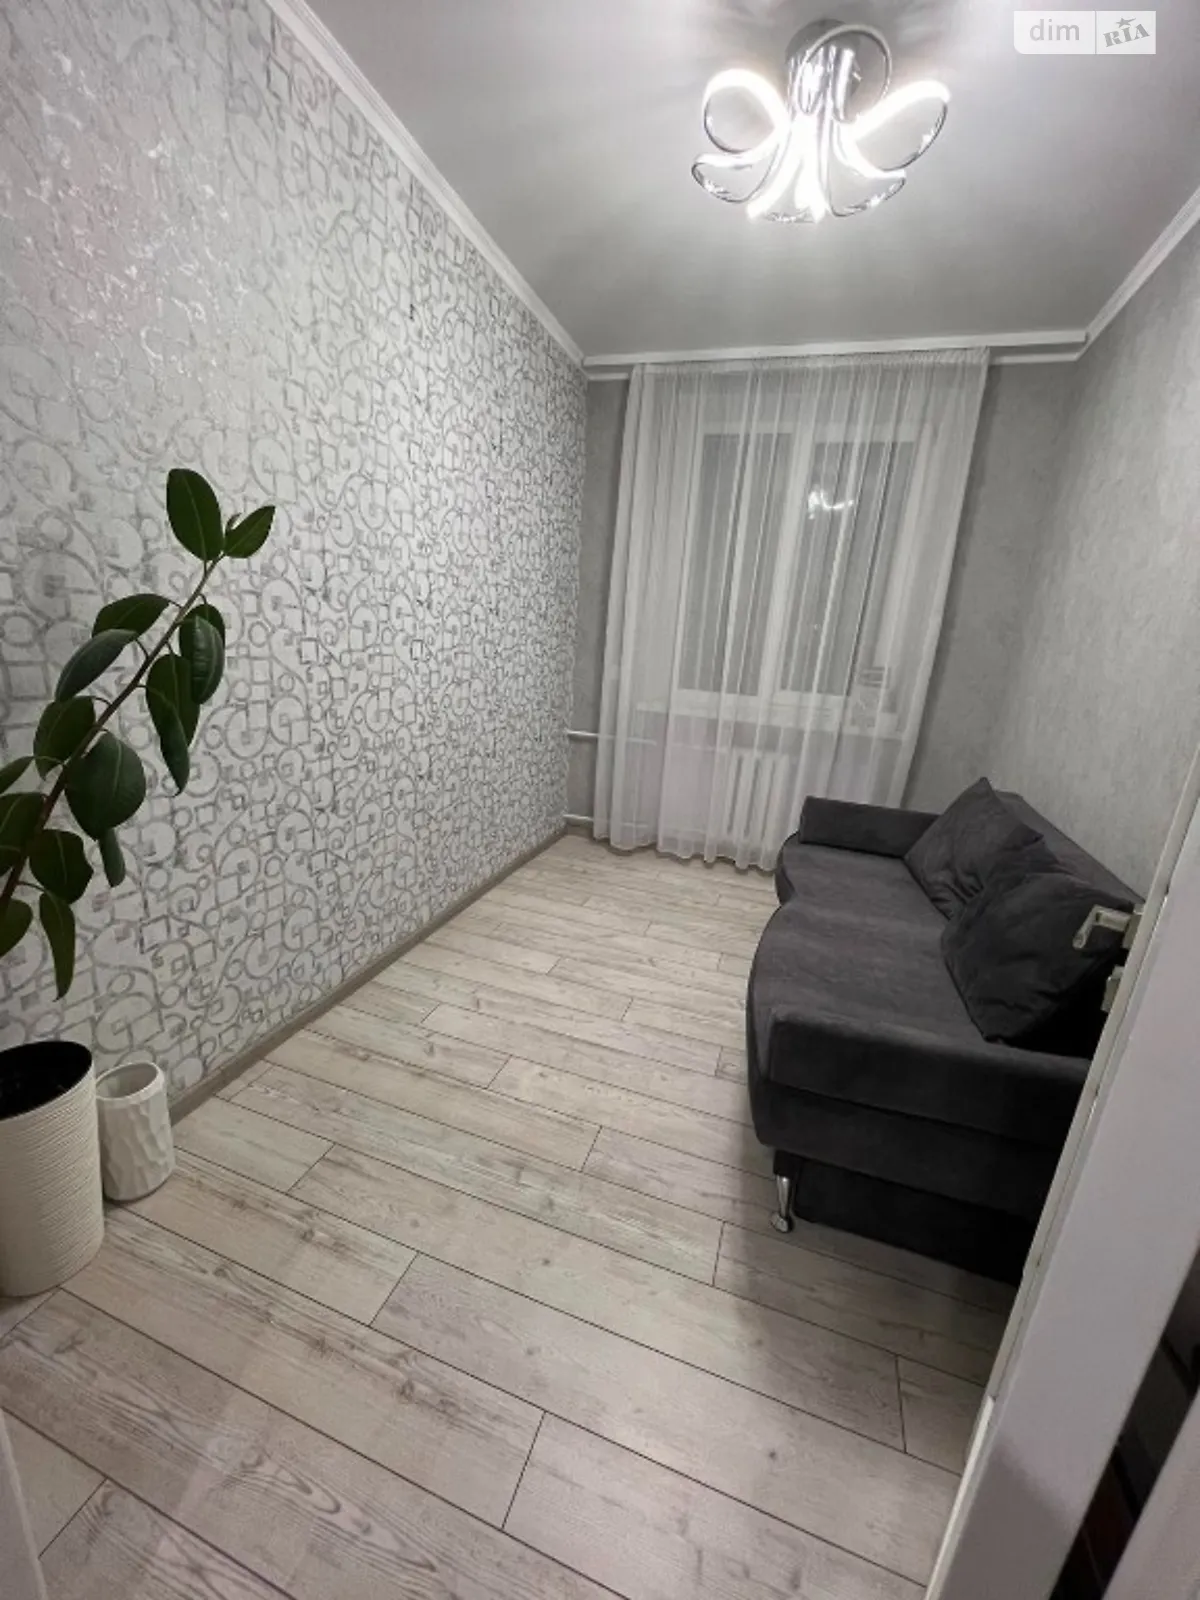 Продается комната 61.5 кв. м в Ровно - фото 3